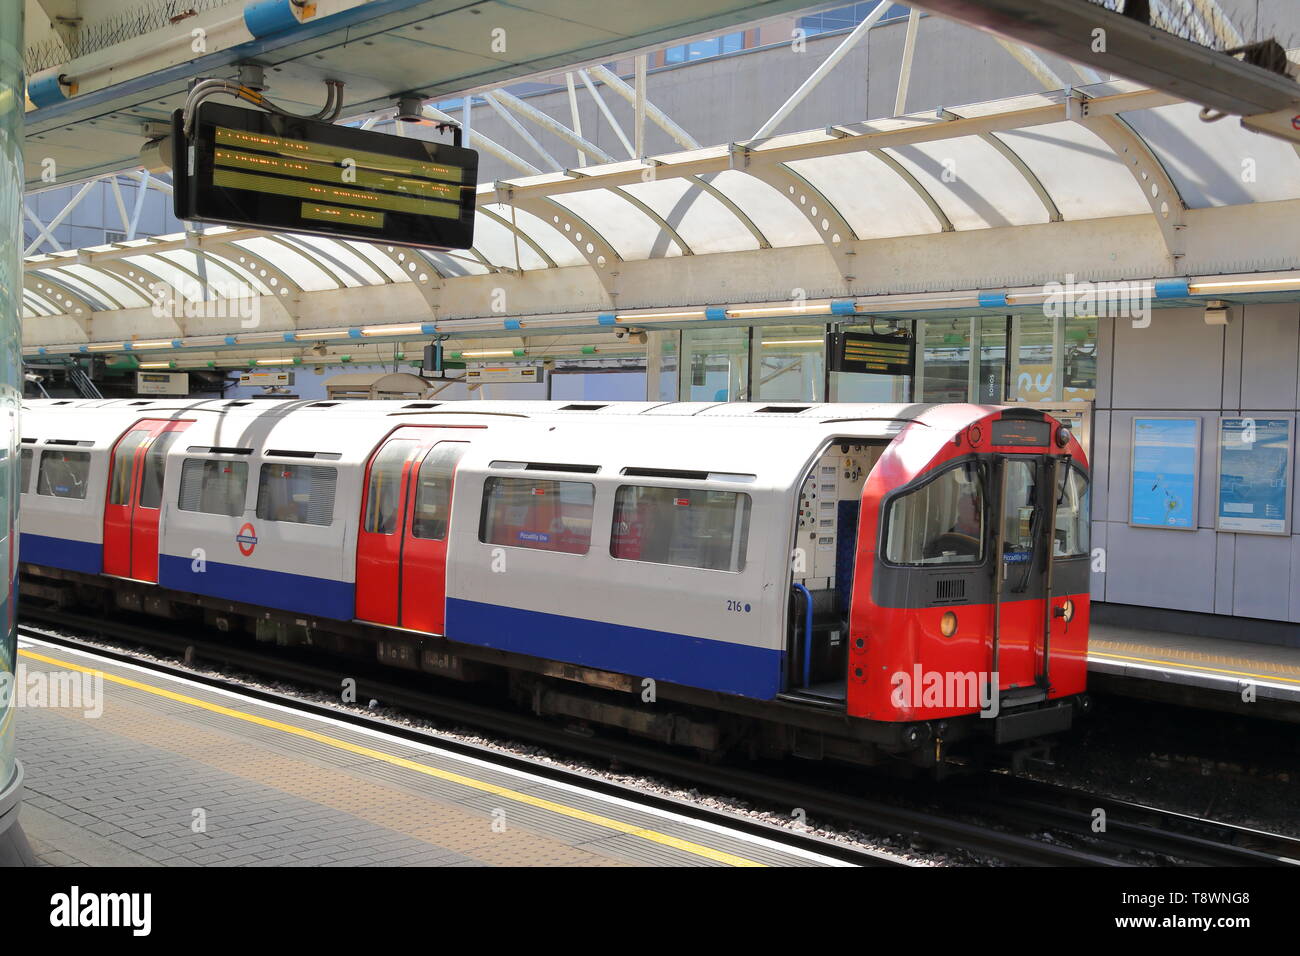 An Underground train arriving at Hammersmith tube station, London, UK Stock Photo